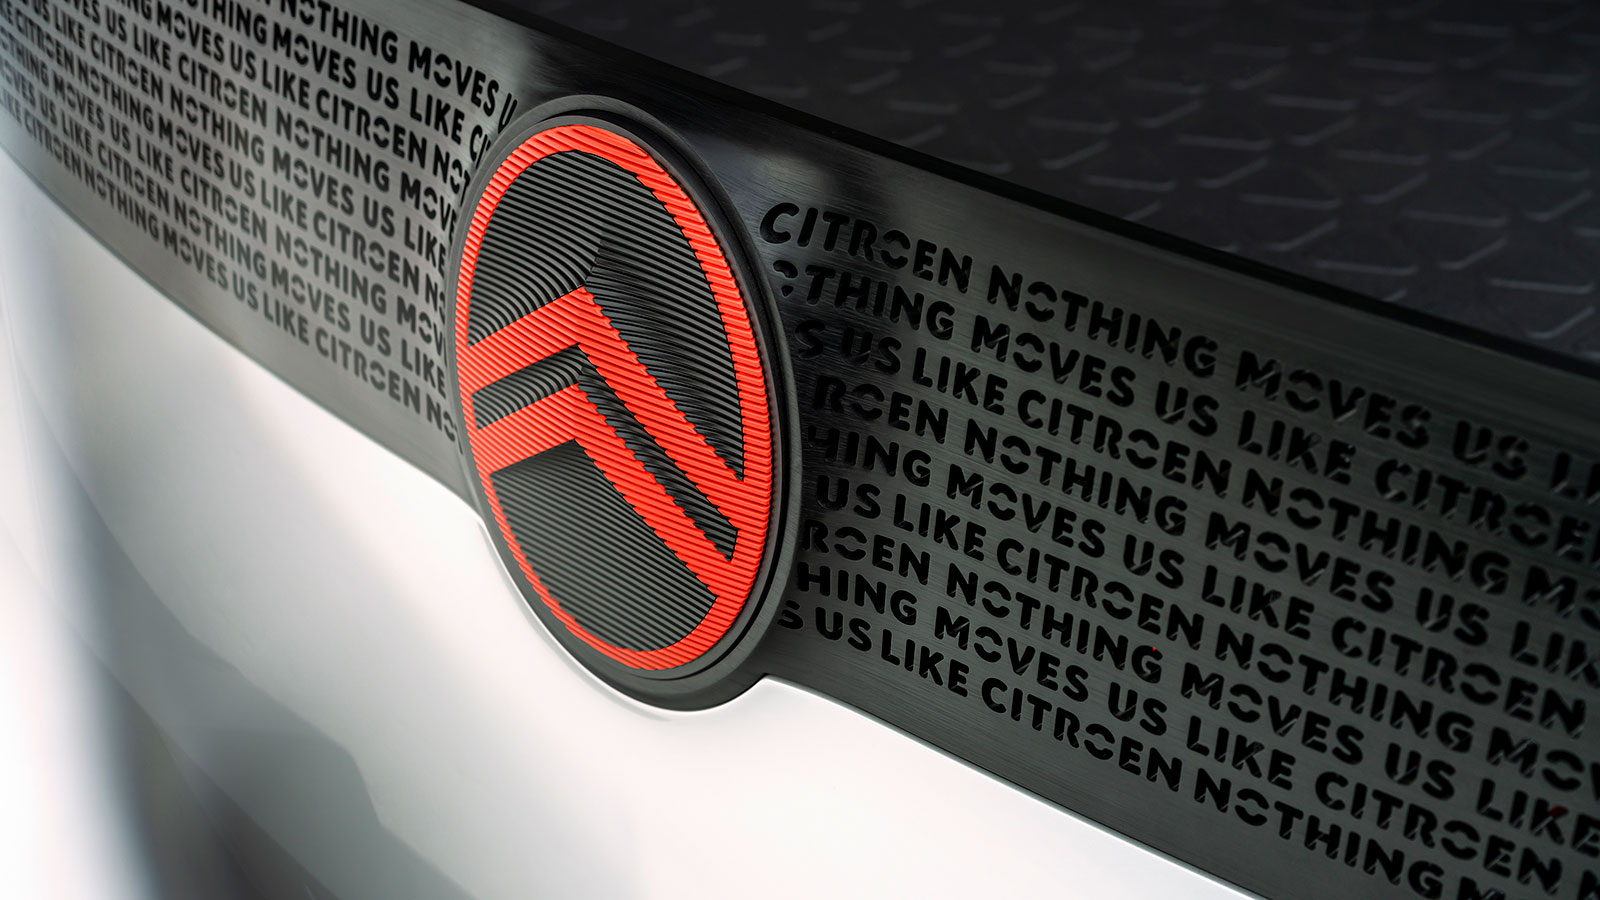 Deux Chevrons: Citroën Apresenta Novo Logotipo E Identidade Visual